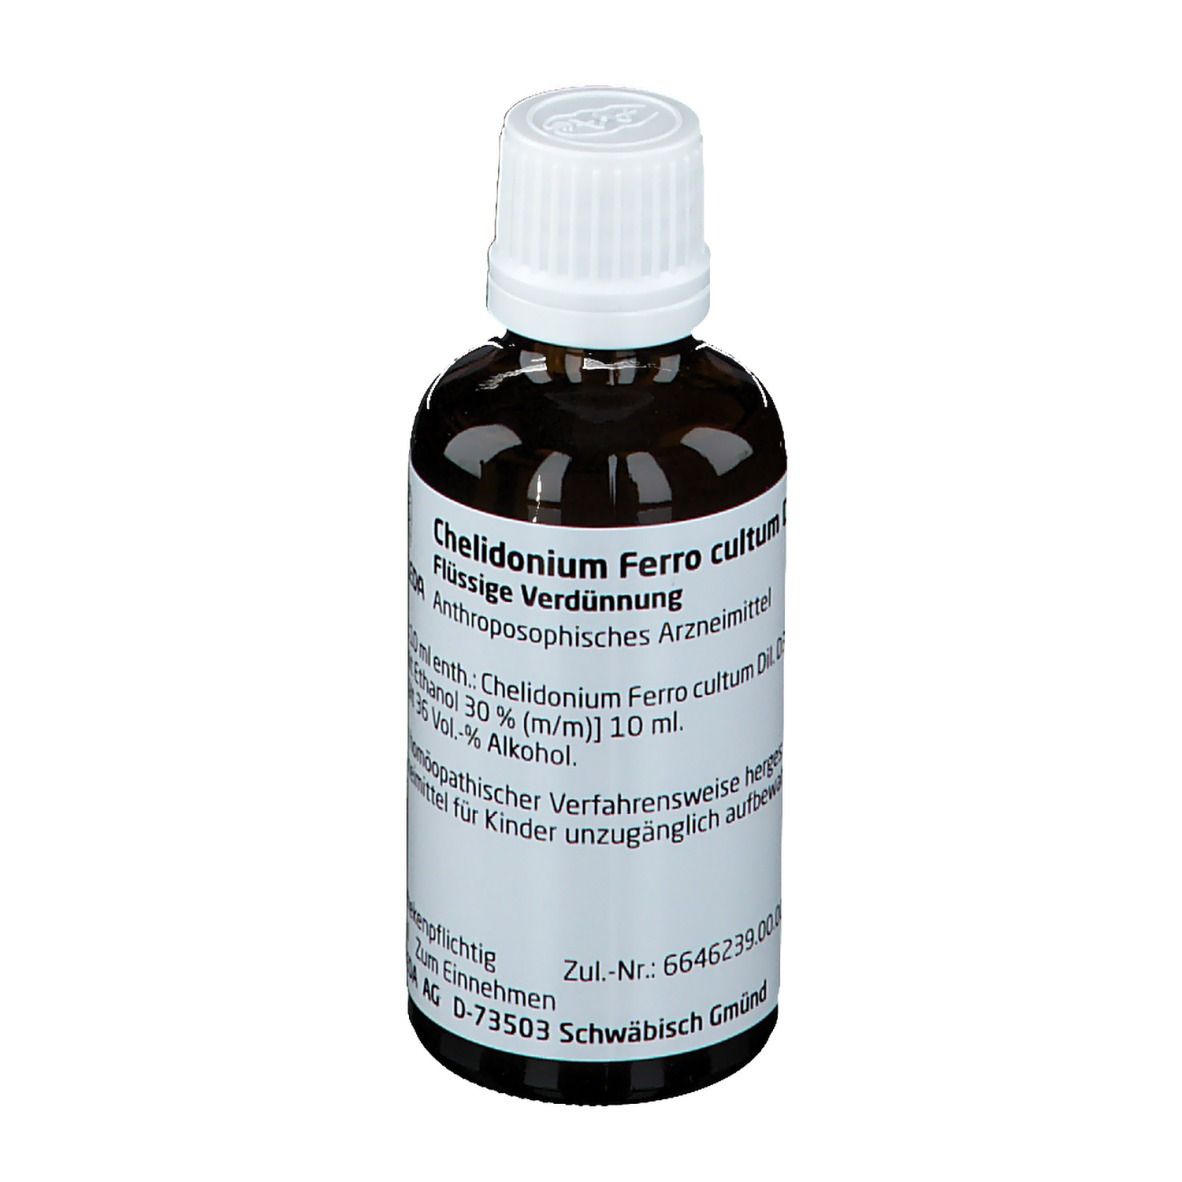 Chelidonium Ferro Cultum D3